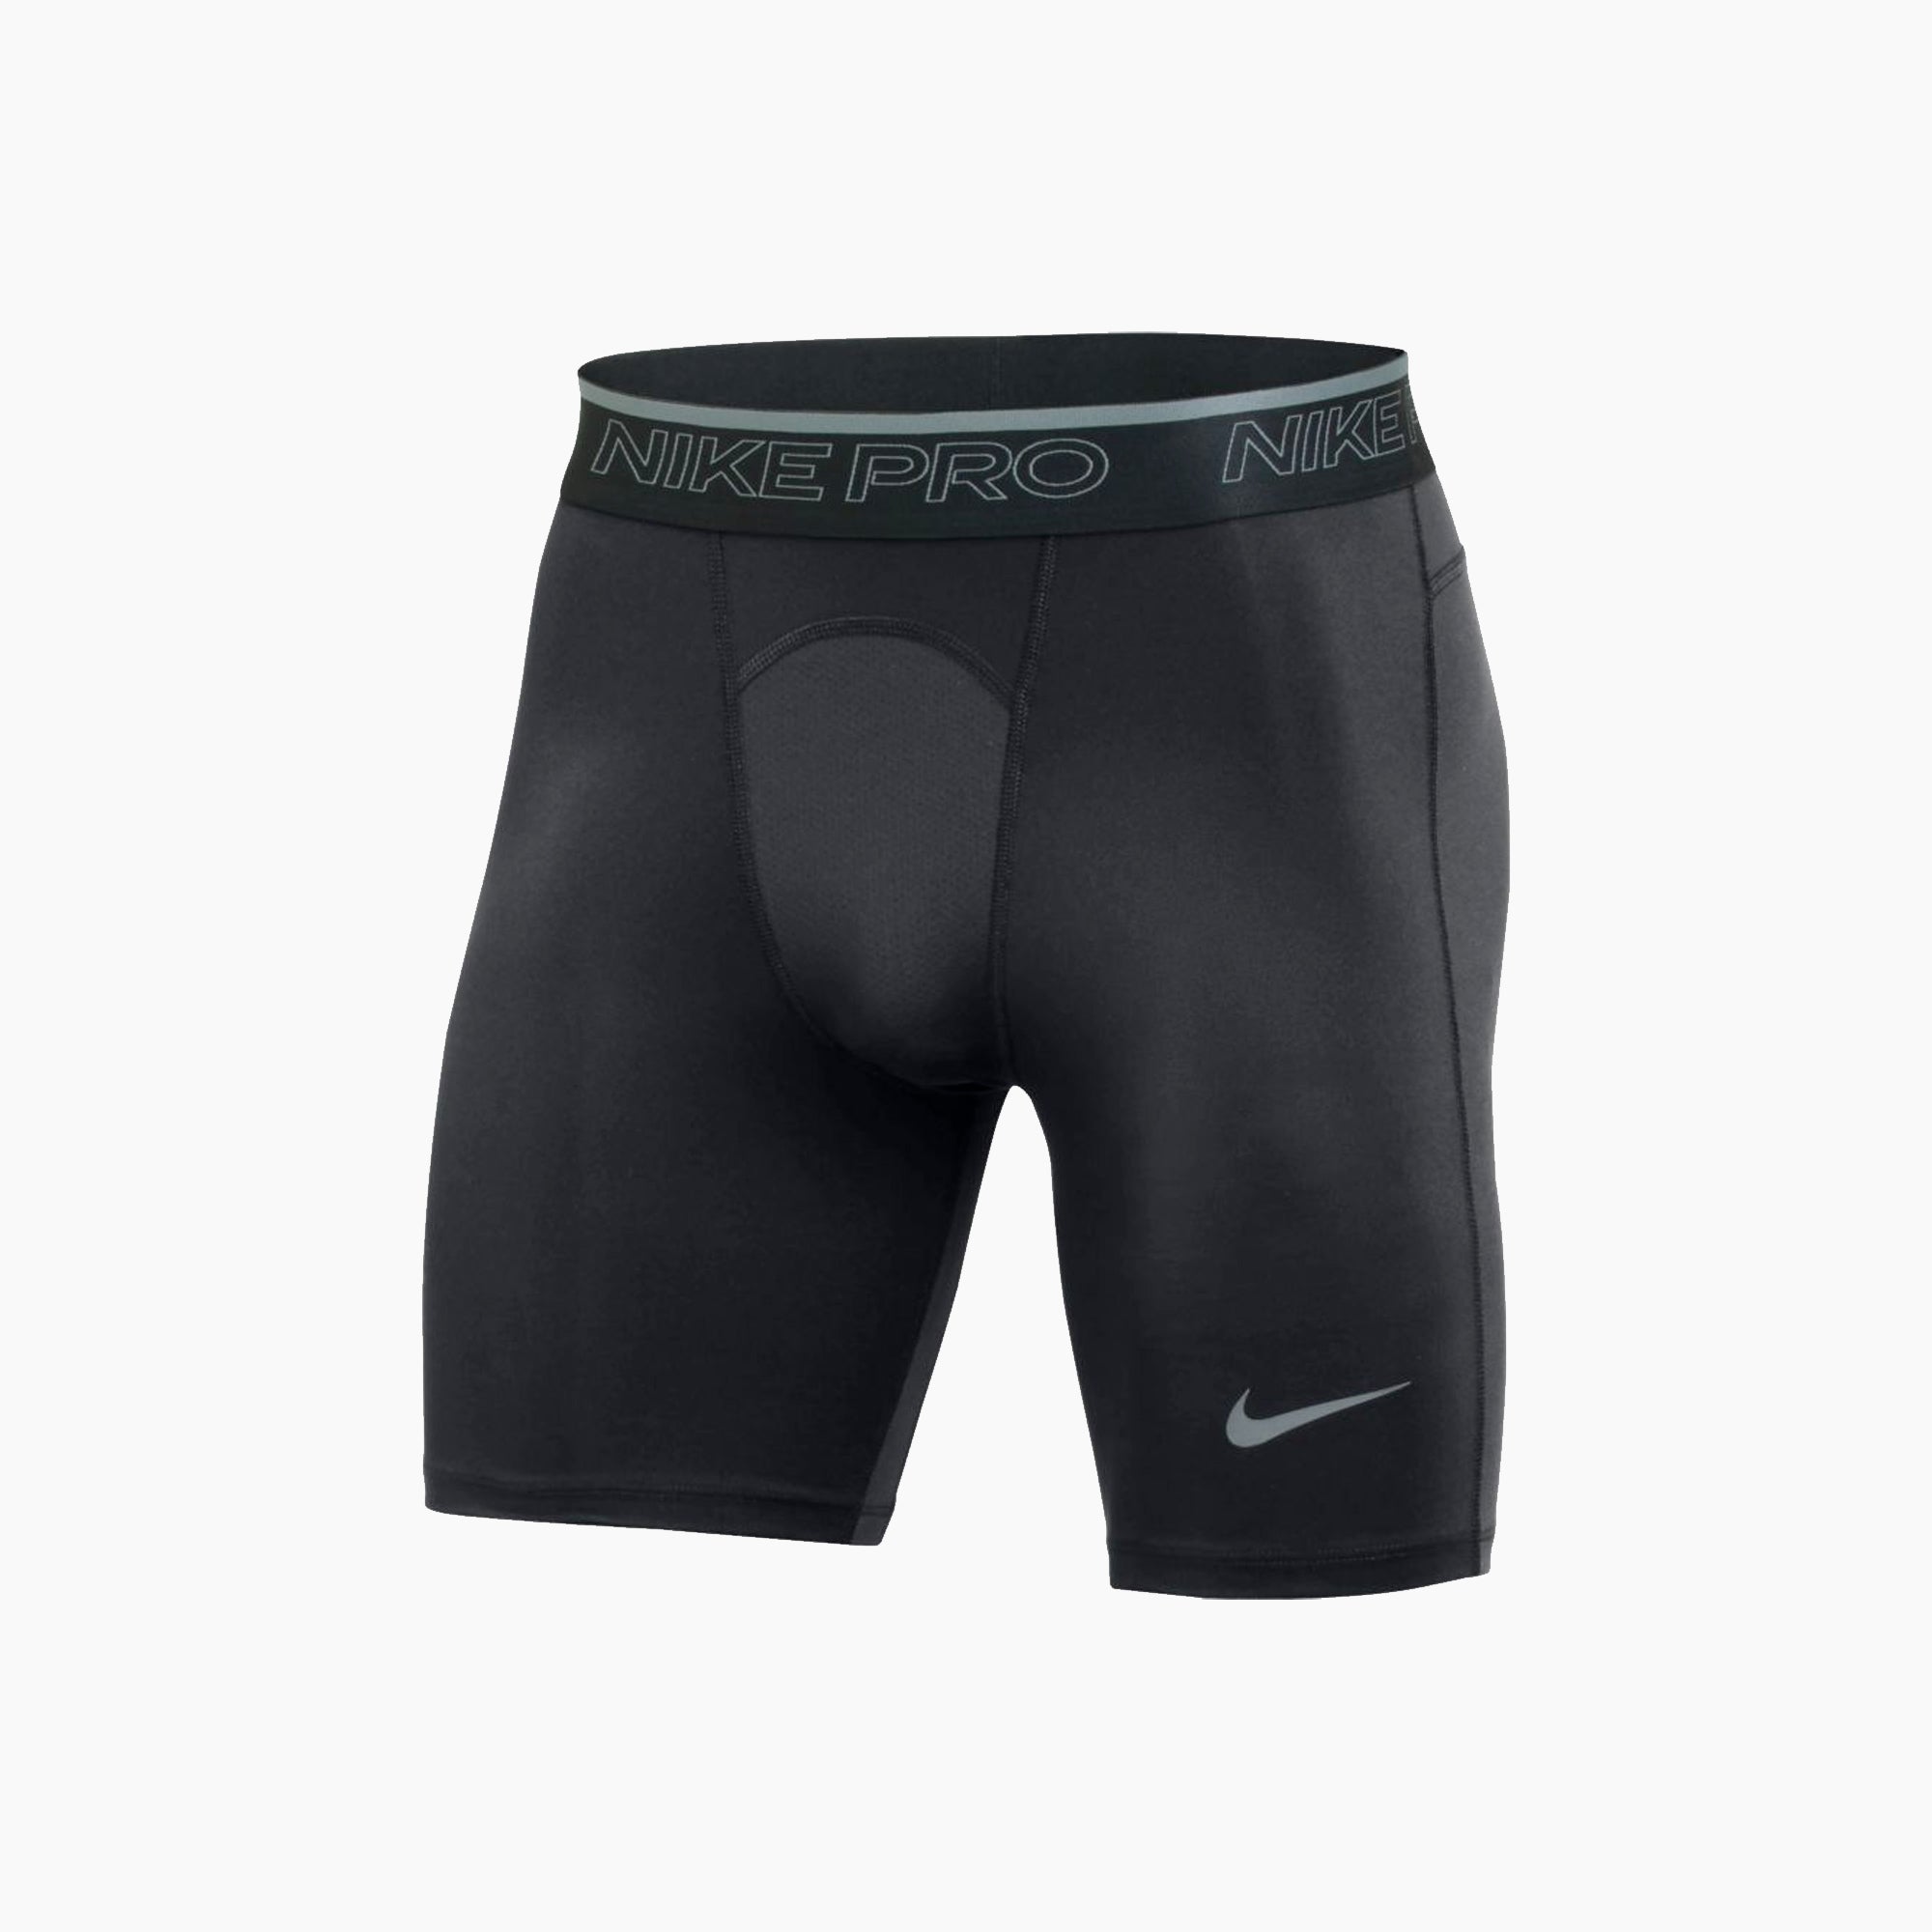 Nike Pro Combat Men’s 2XL XXL Padded Compression Shorts Black 574512-010